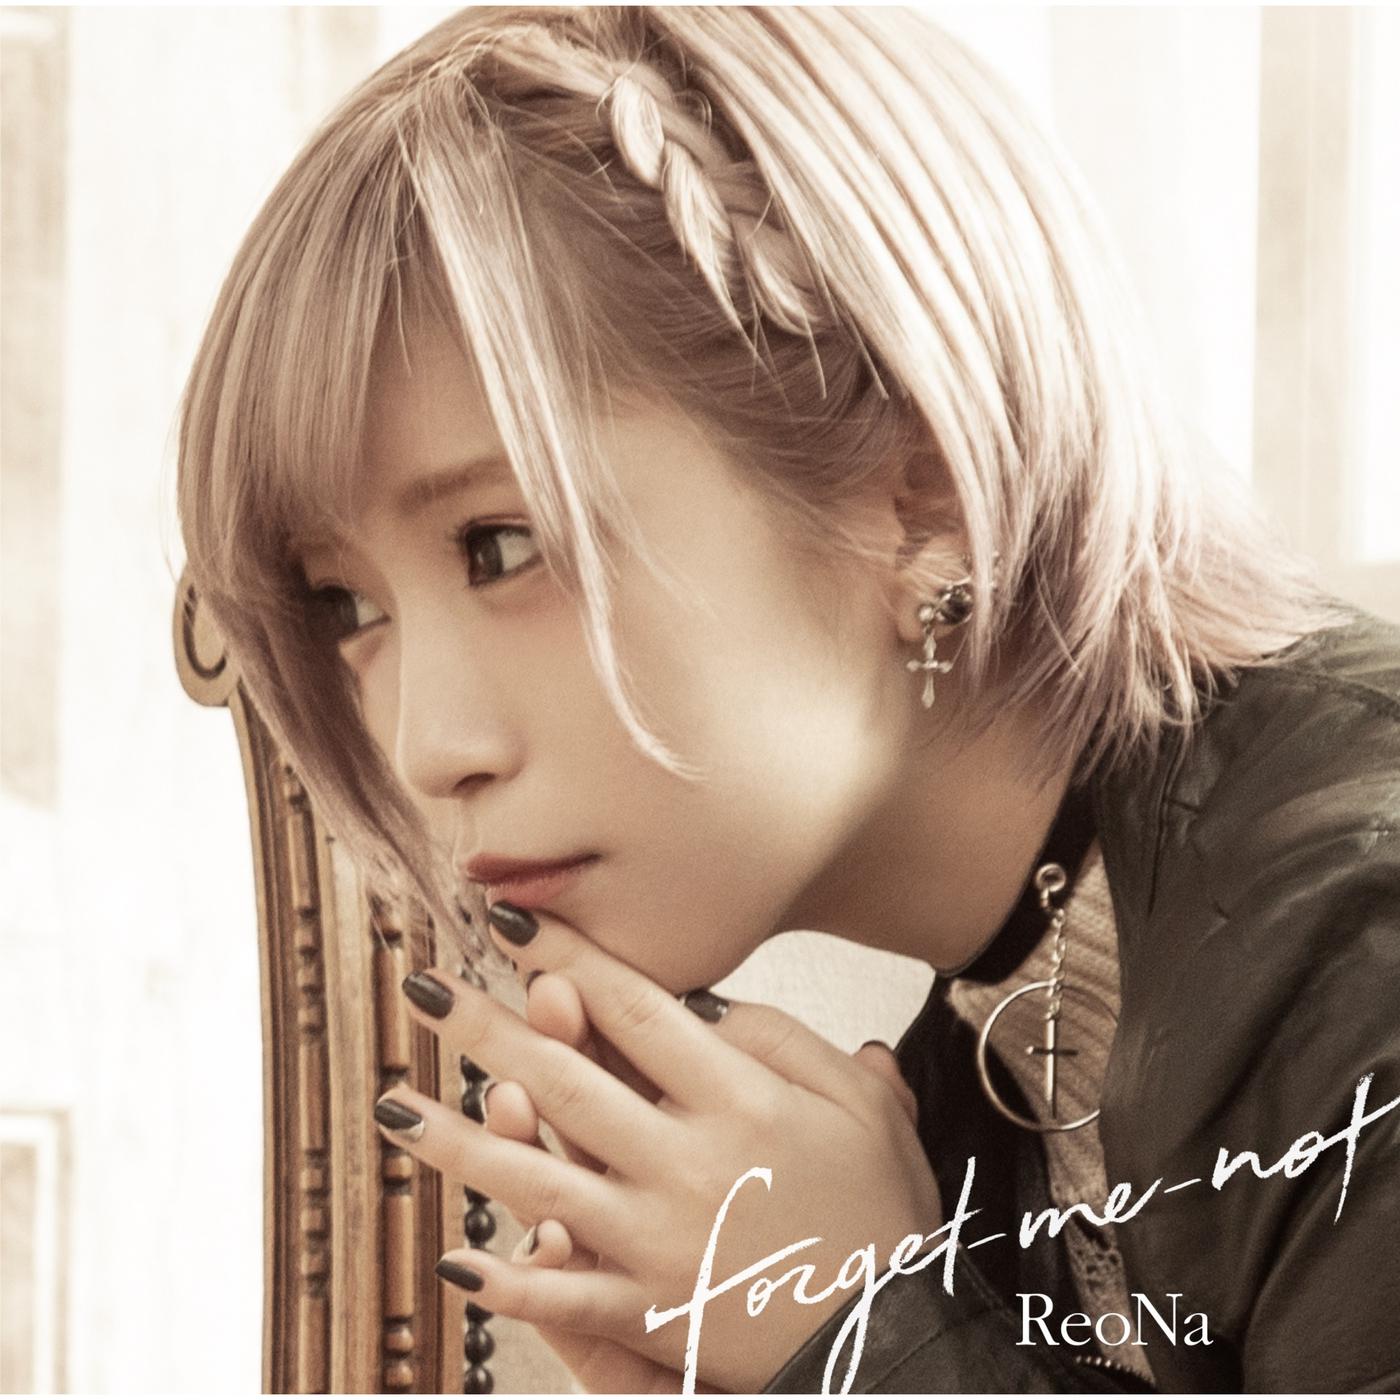 forget-me-not歌词 歌手ReoNa-专辑forget-me-not-单曲《forget-me-not》LRC歌词下载